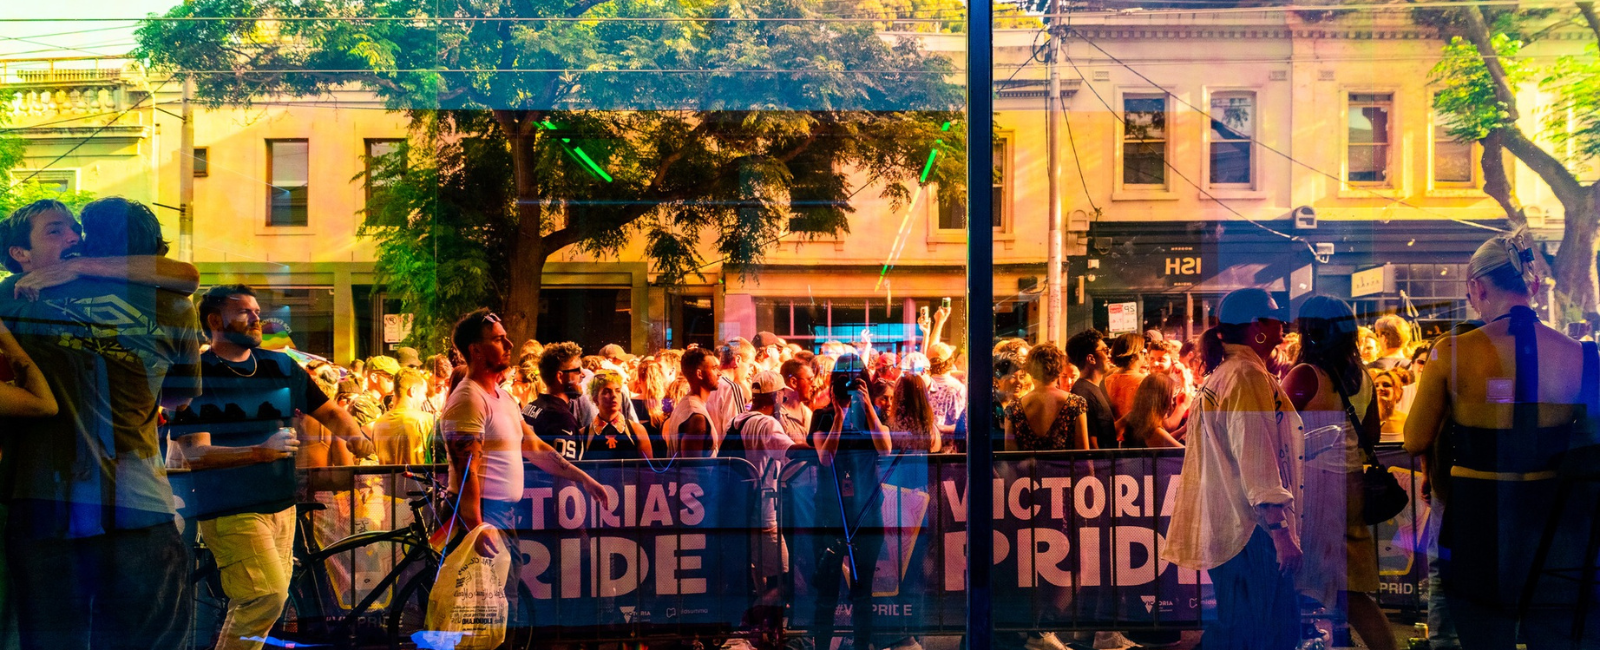 Street filled with people celebrating Melbourne Midsumma Festival